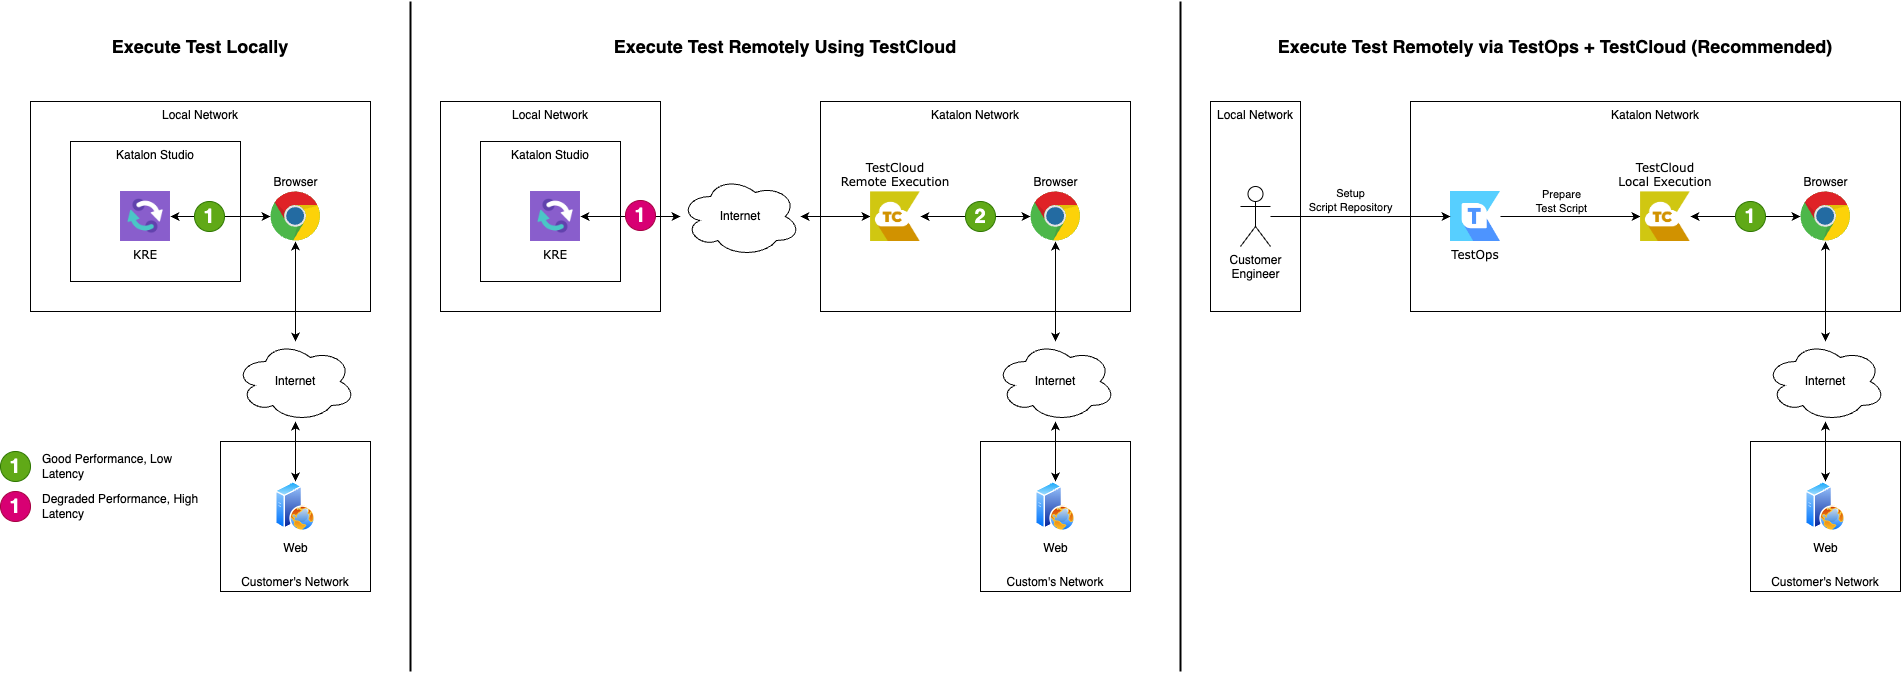 TestCloud execution models